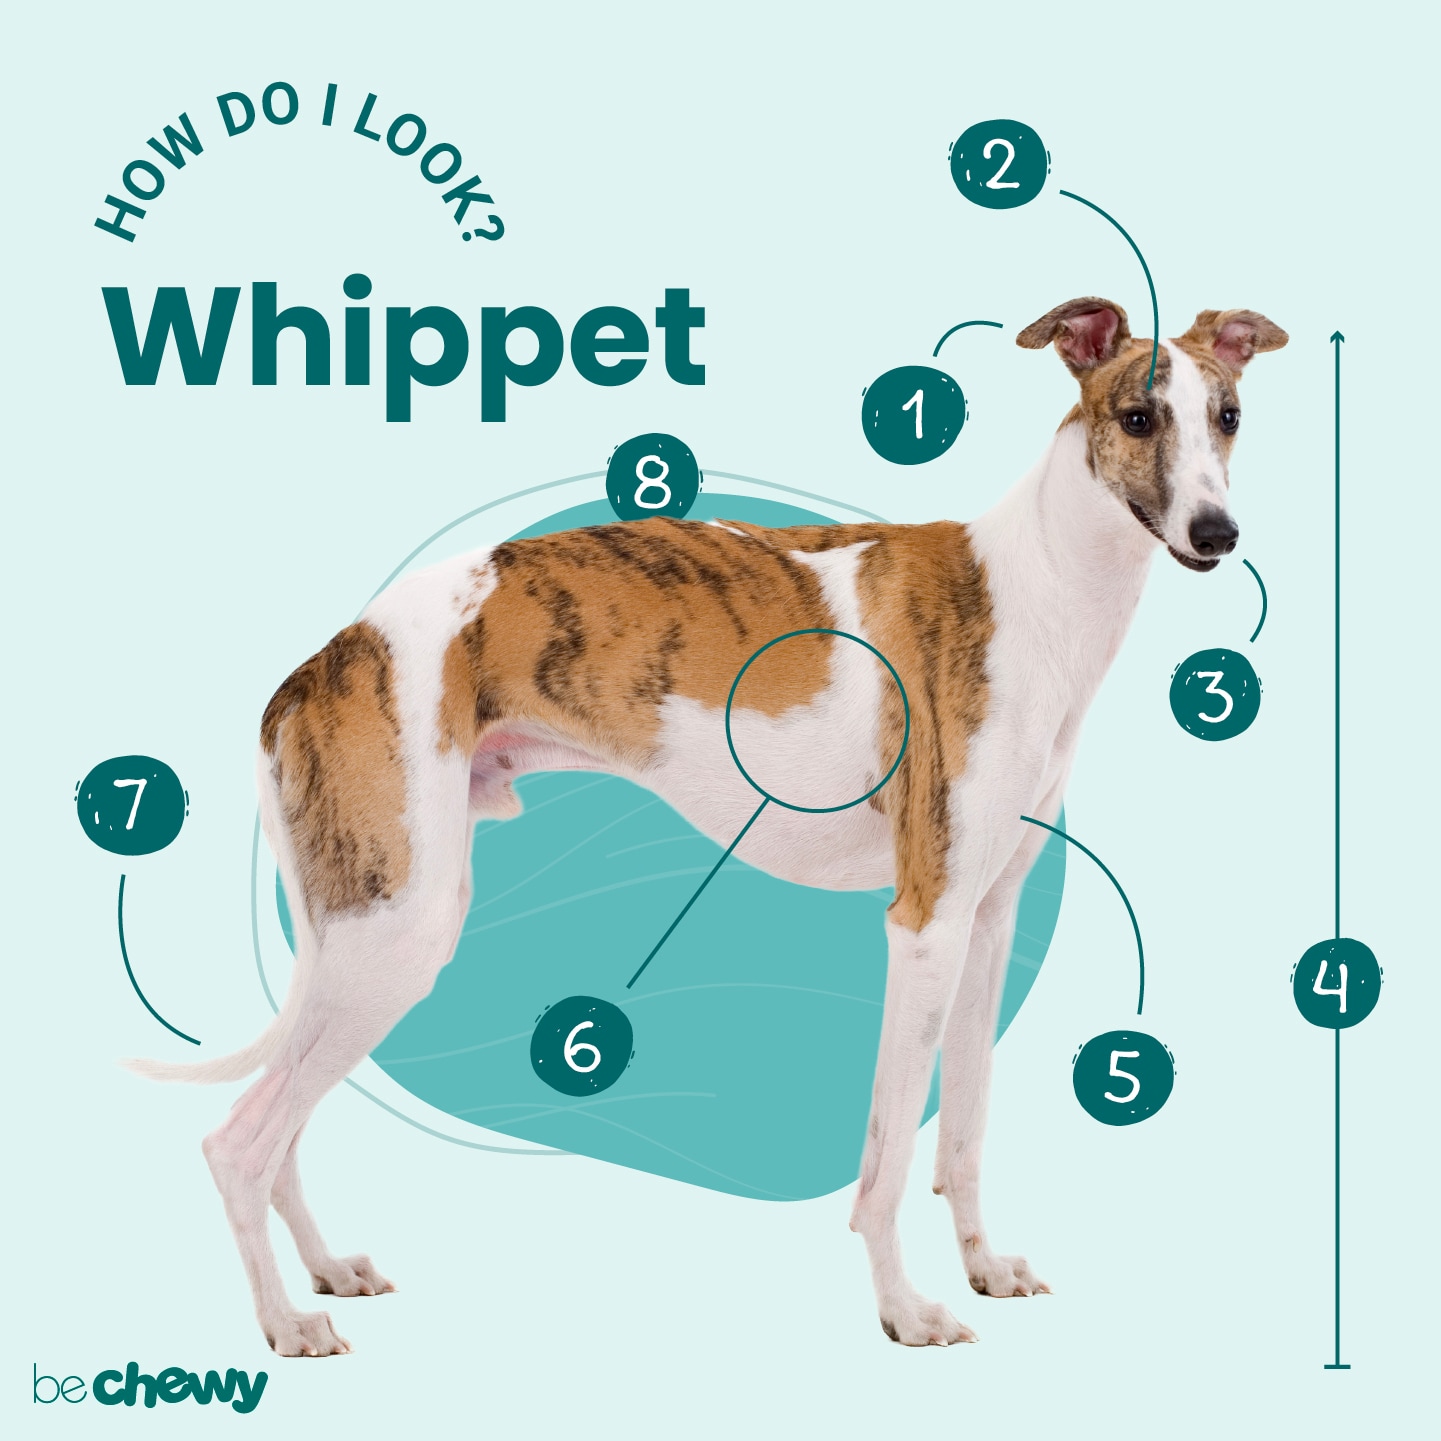 do whippets make good pets